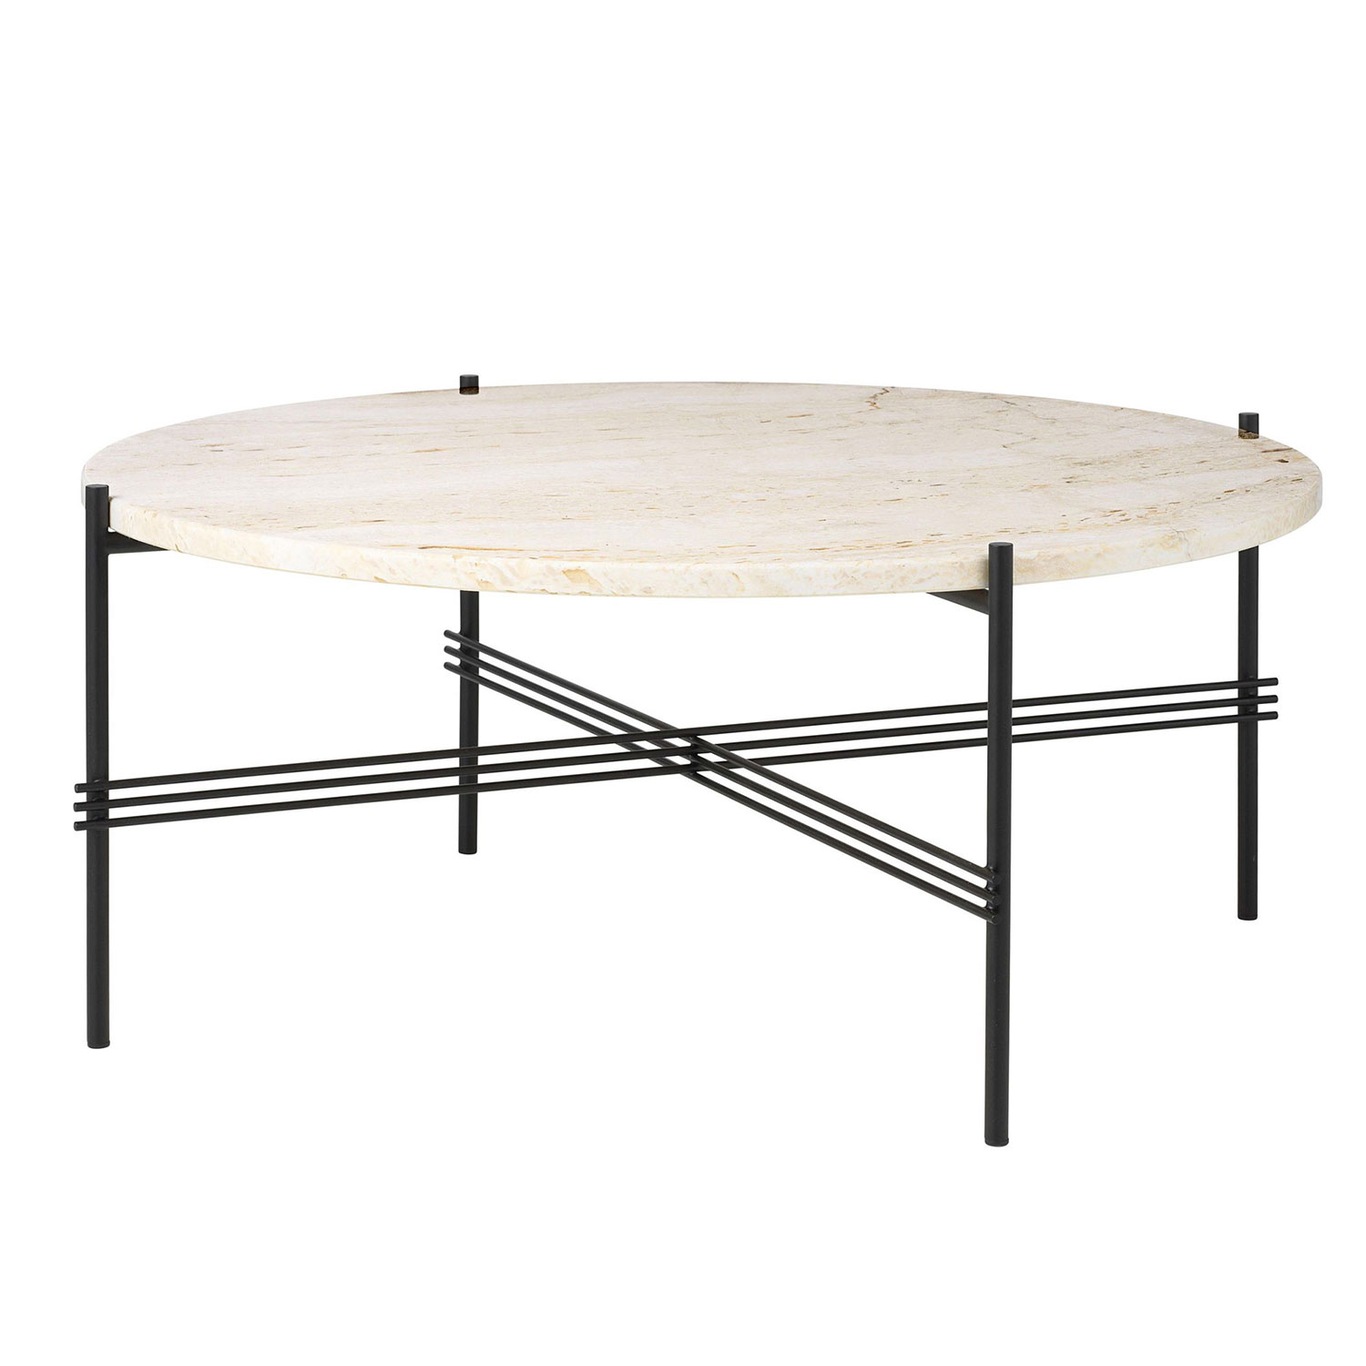 TS Coffee Table 80 cm, Black / Neutral white Travertine